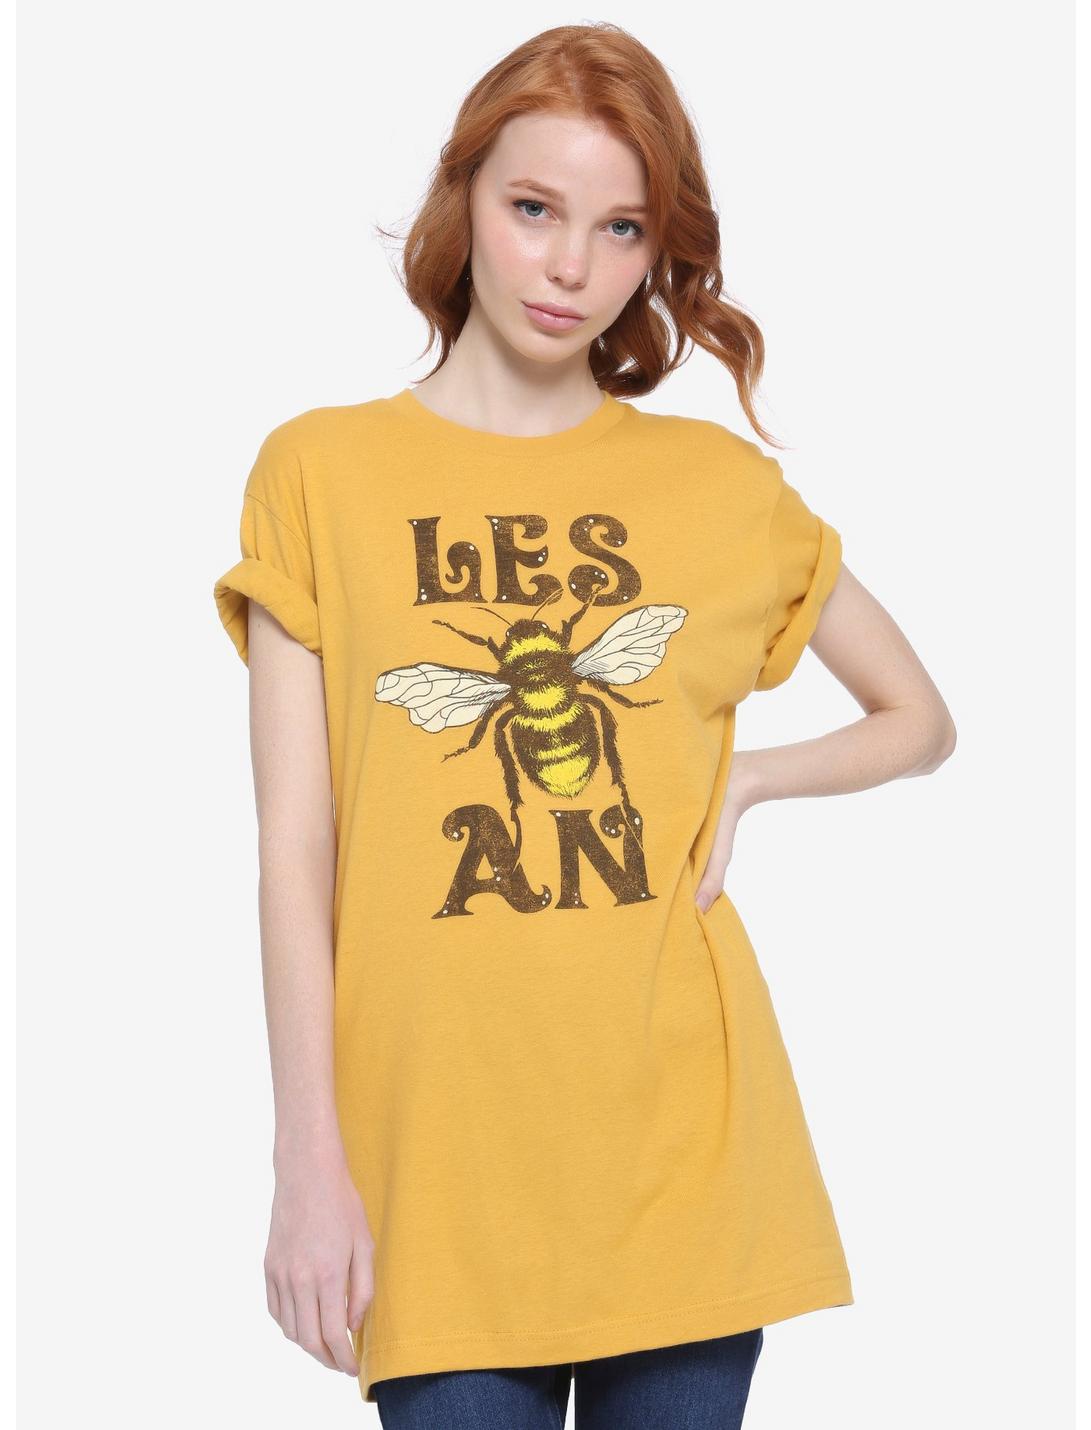 Les Bee An Girls T-Shirt, MULTI, hi-res